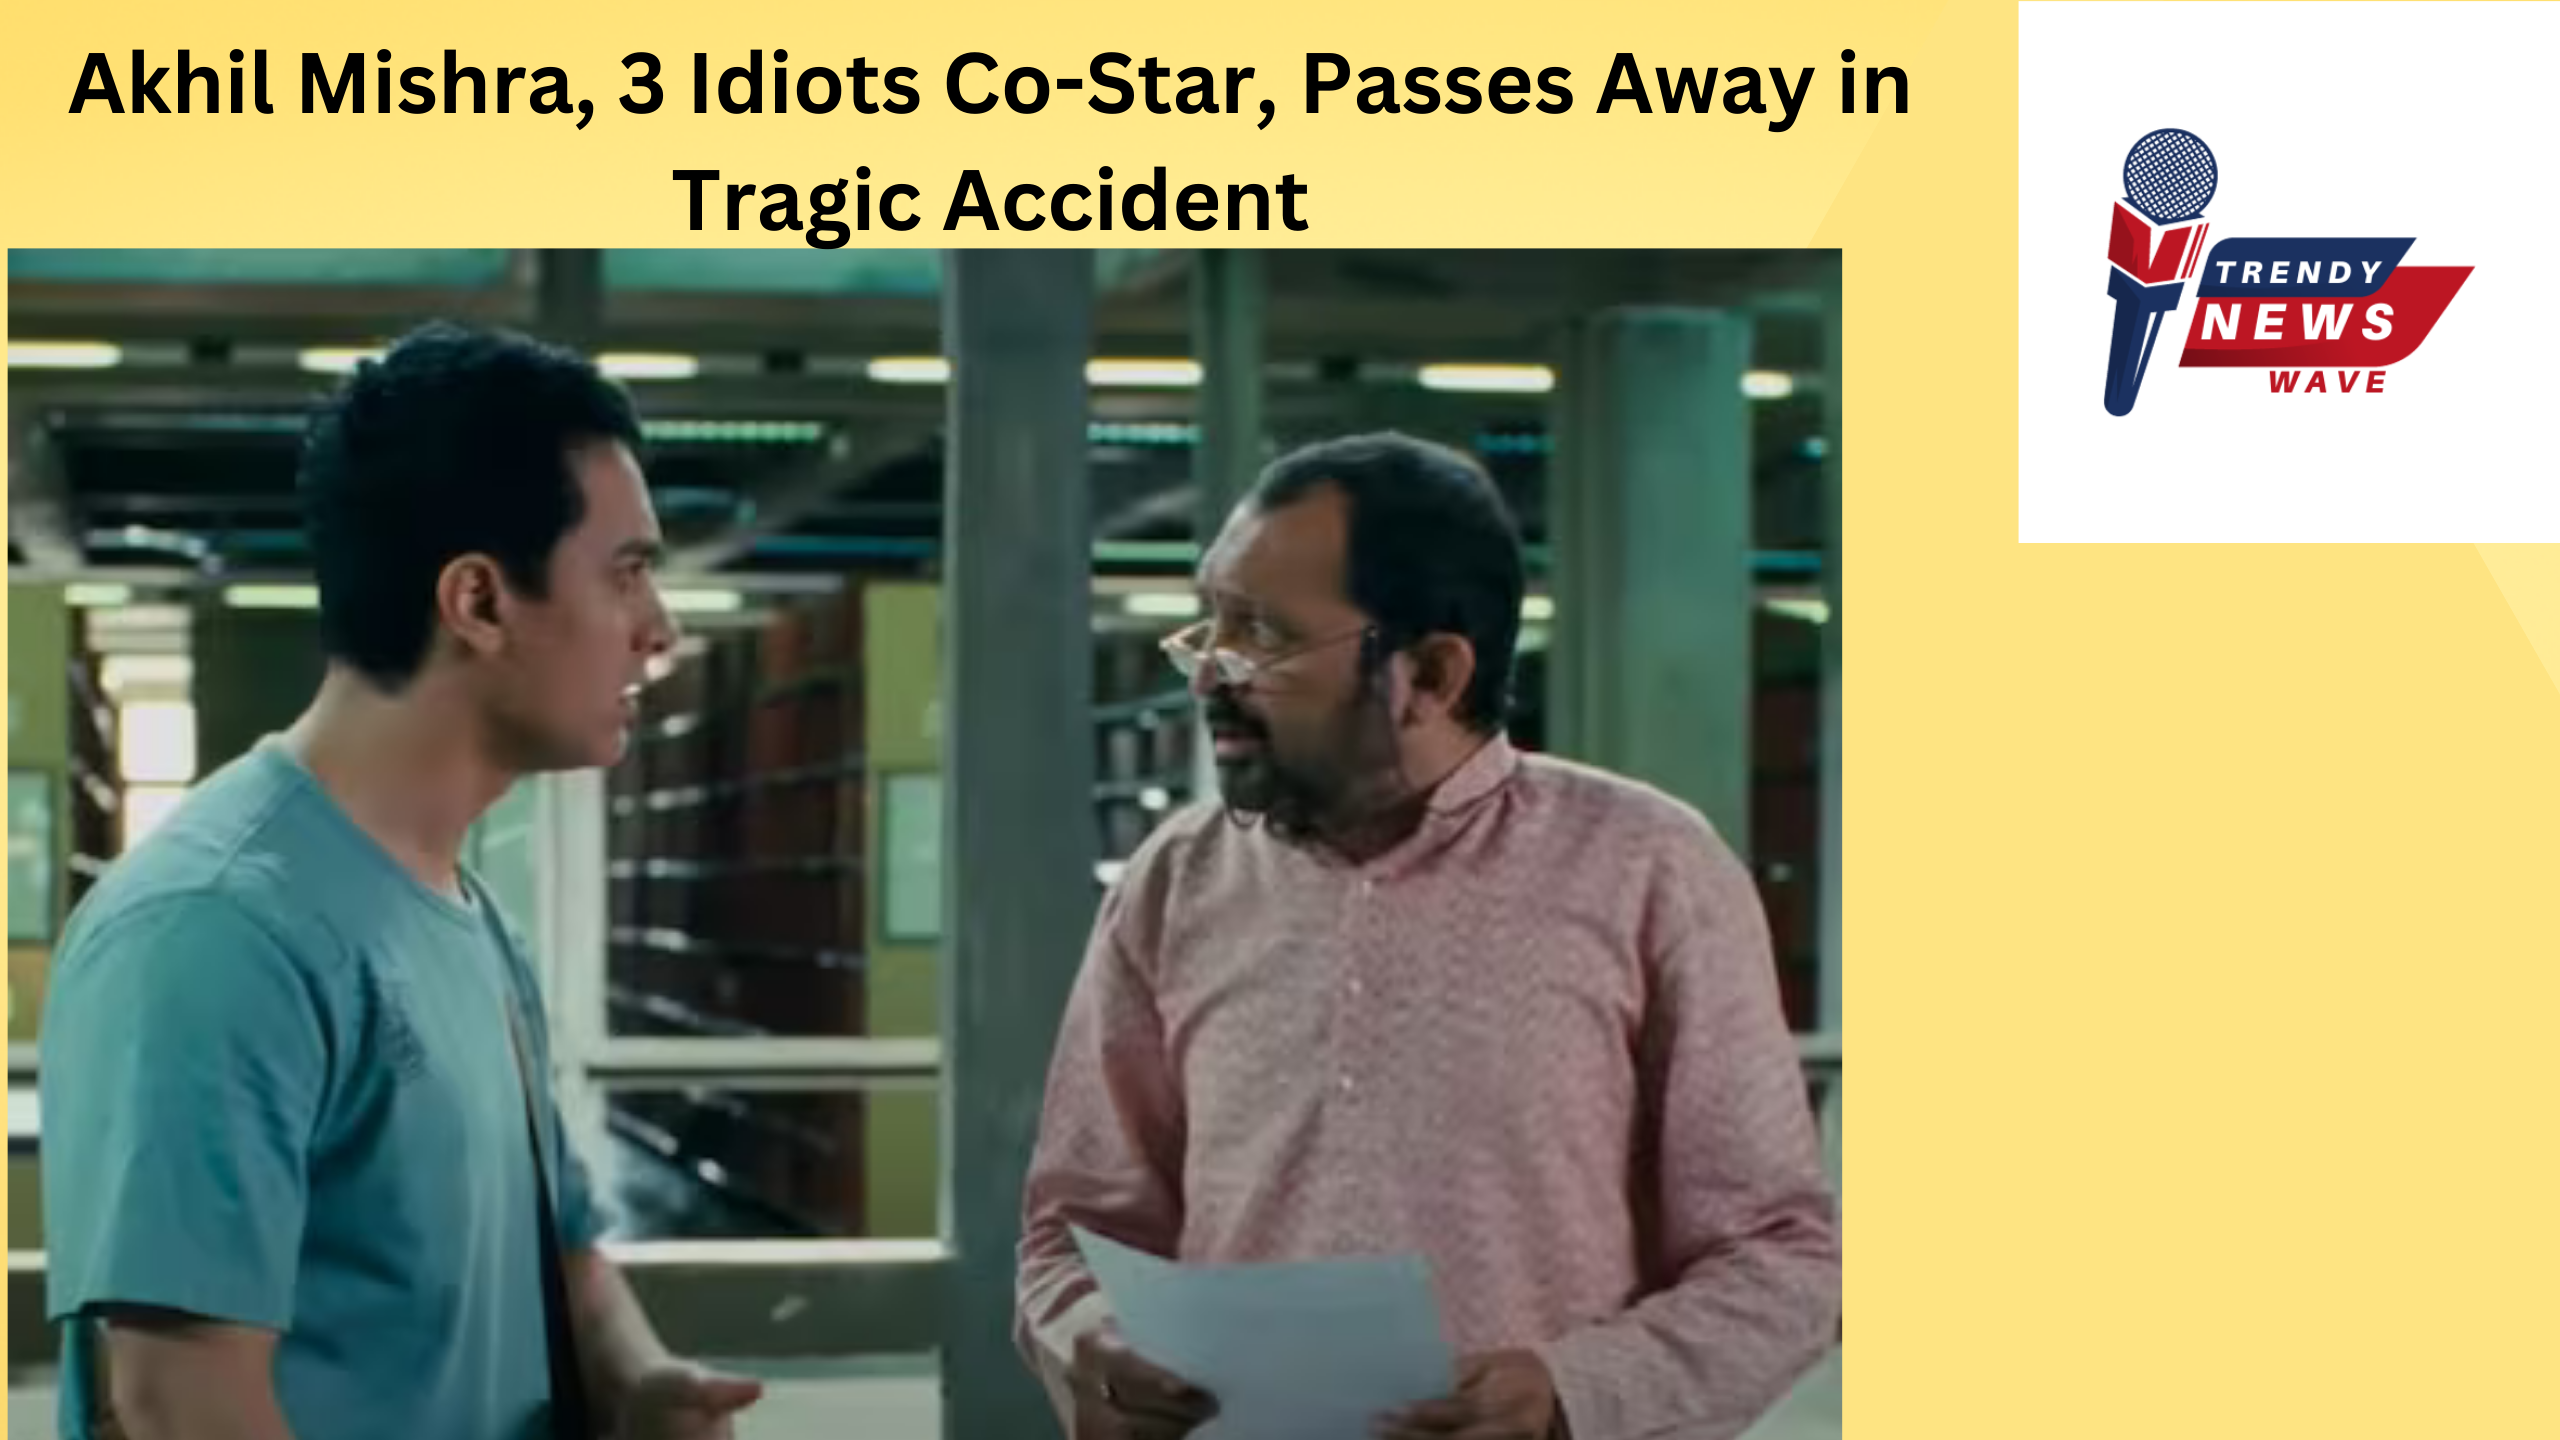 Akhil Mishra, 3 Idiots Co-Star, Passes Away in Tragic Accident